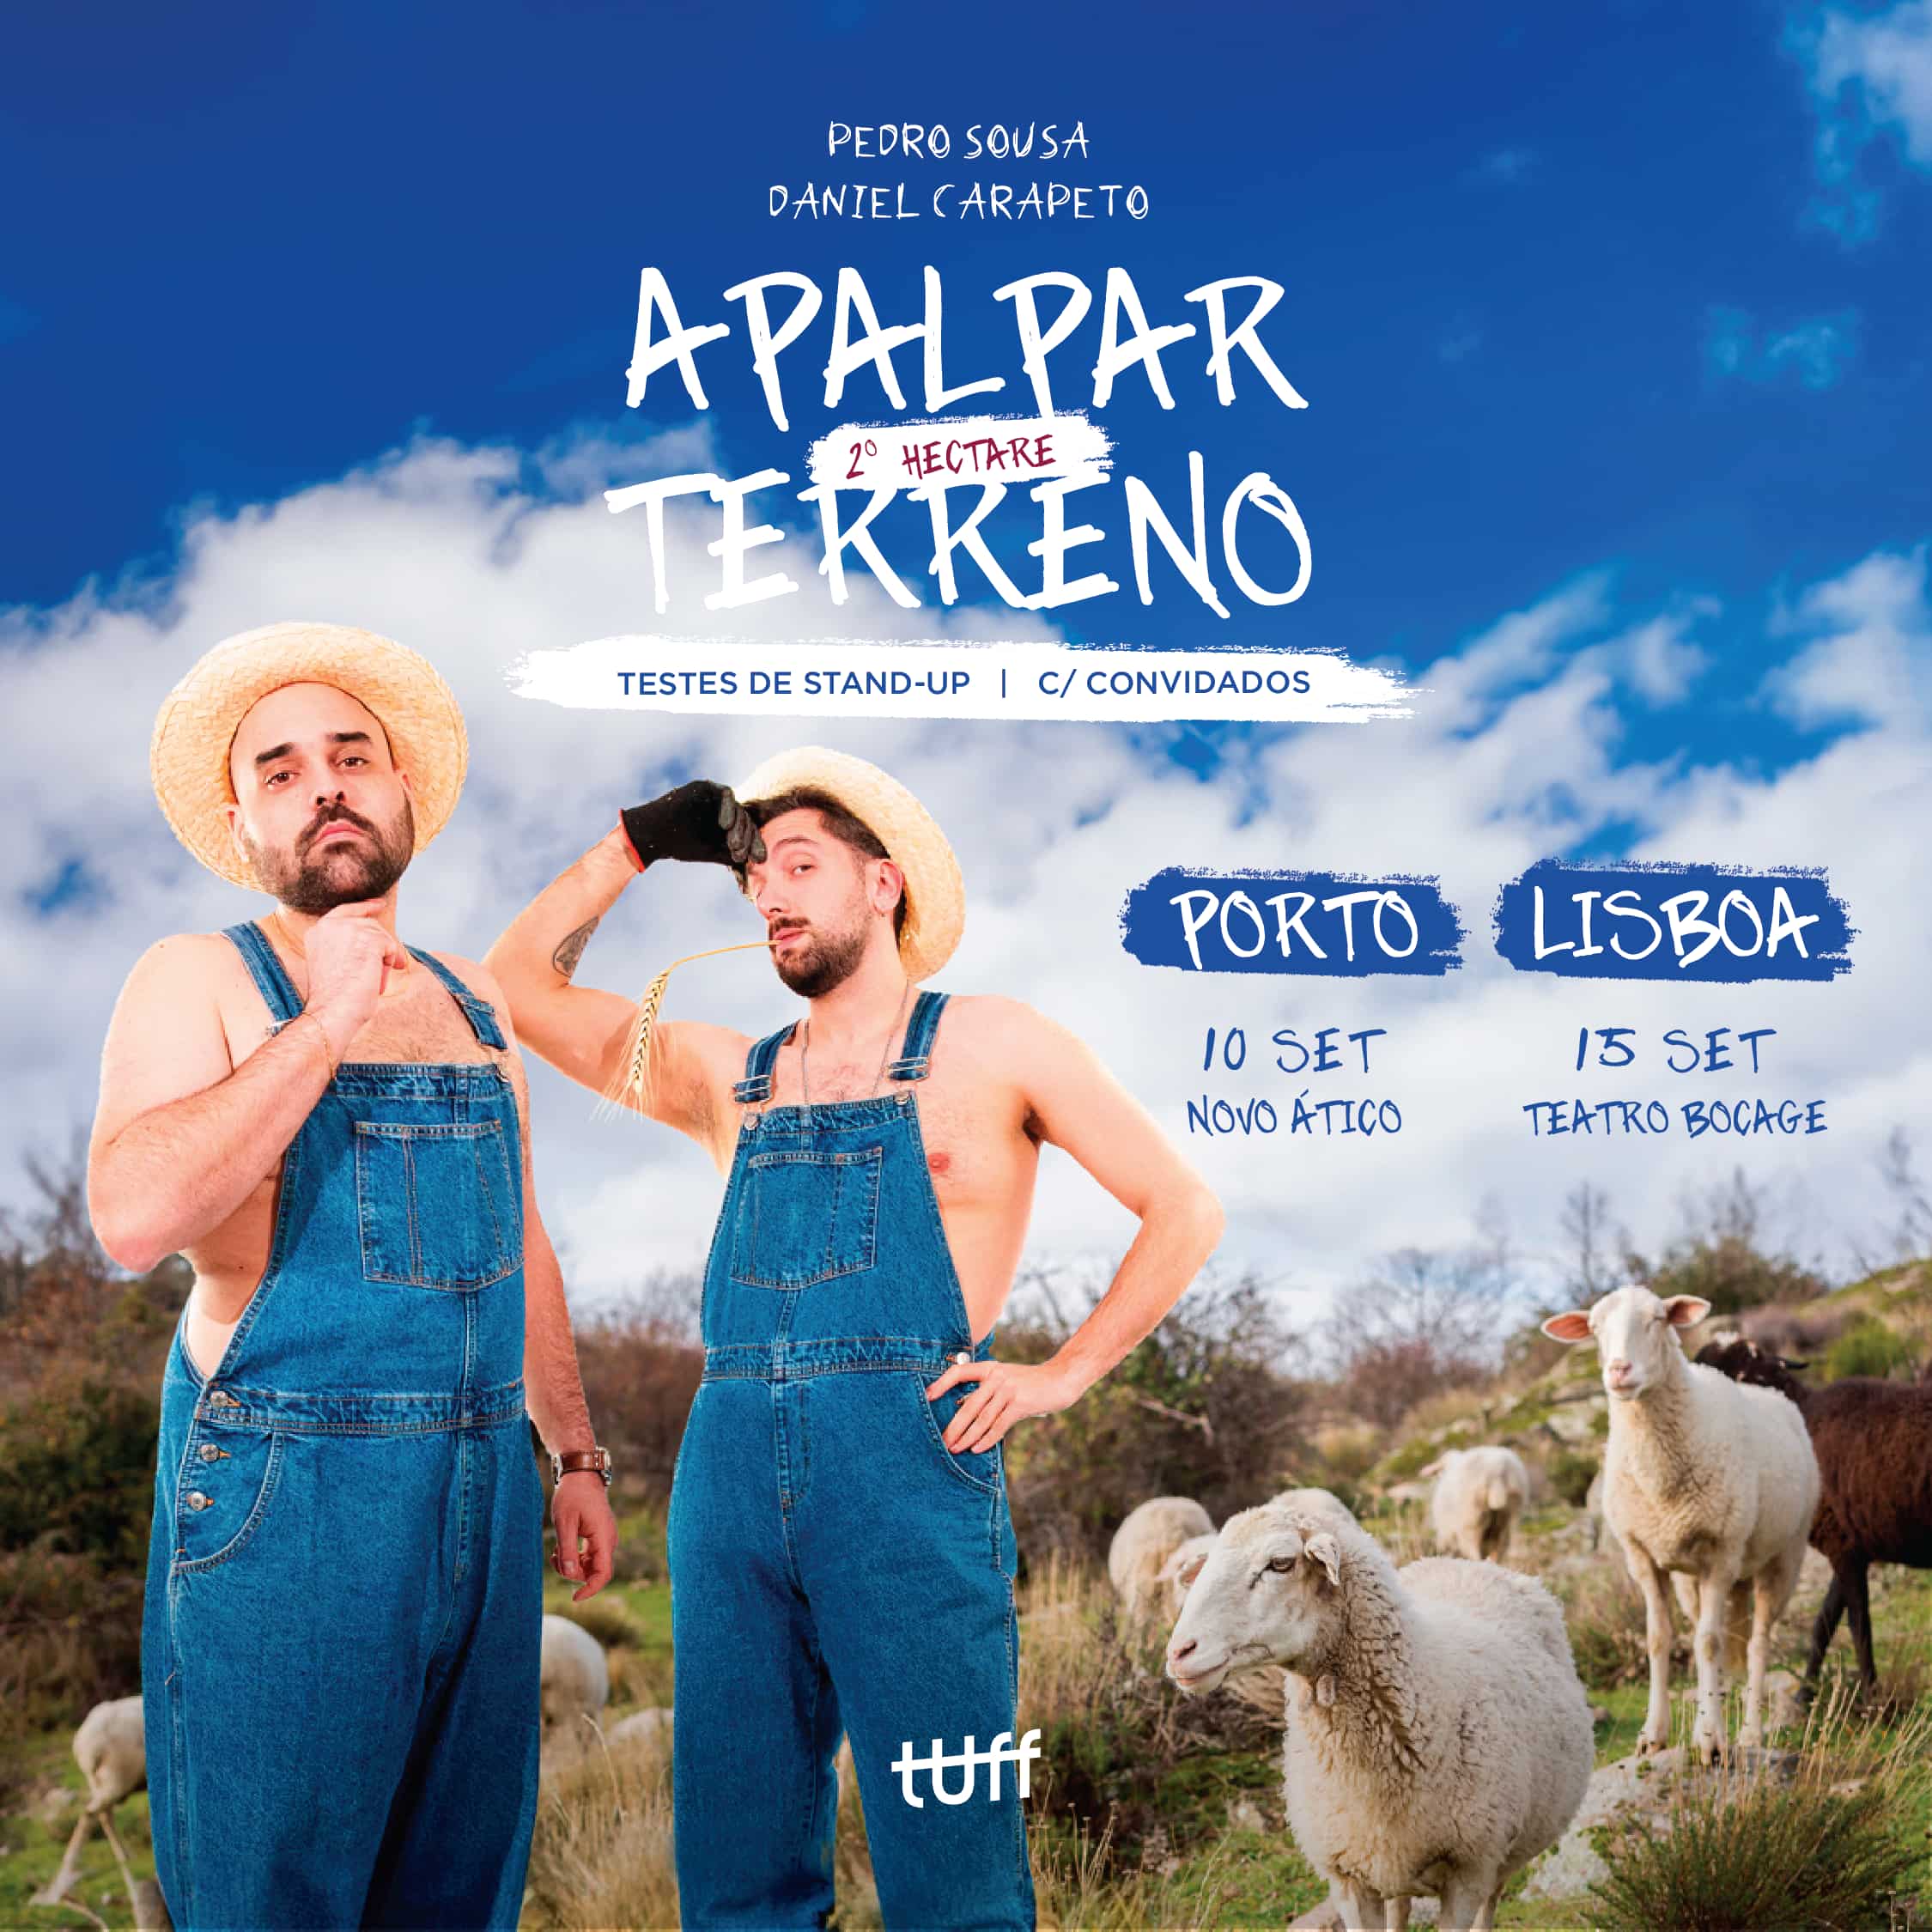 Apalpar Terreno c/ Pedro Sousa e Daniel Carapeto